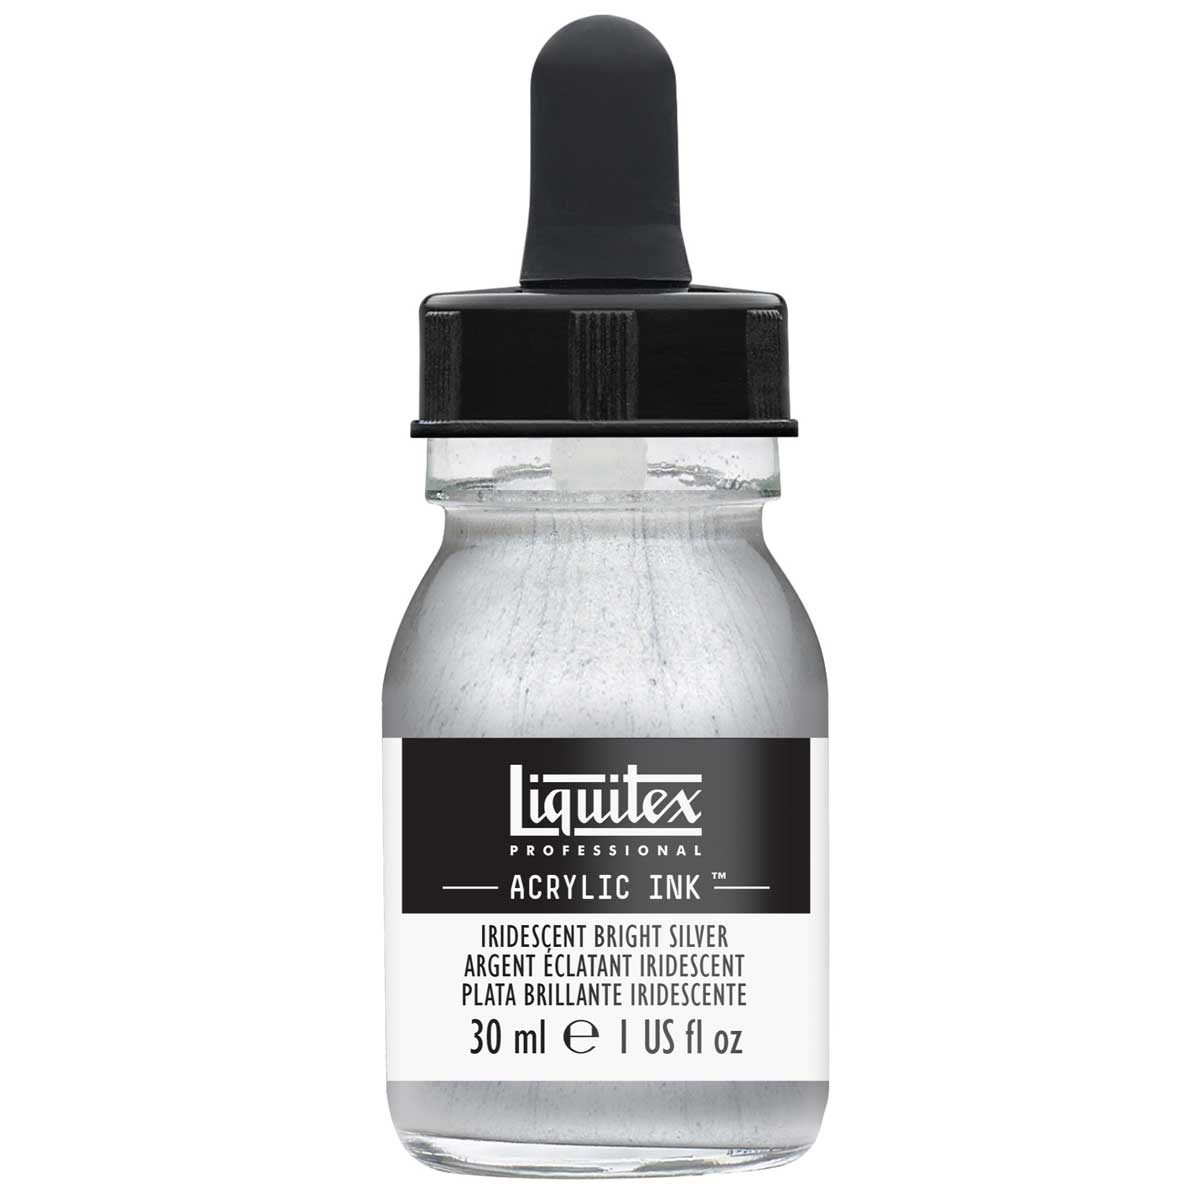 Liquitex Professional Acrylic Ink - Iridescent Bright Silver 30ml/1oz